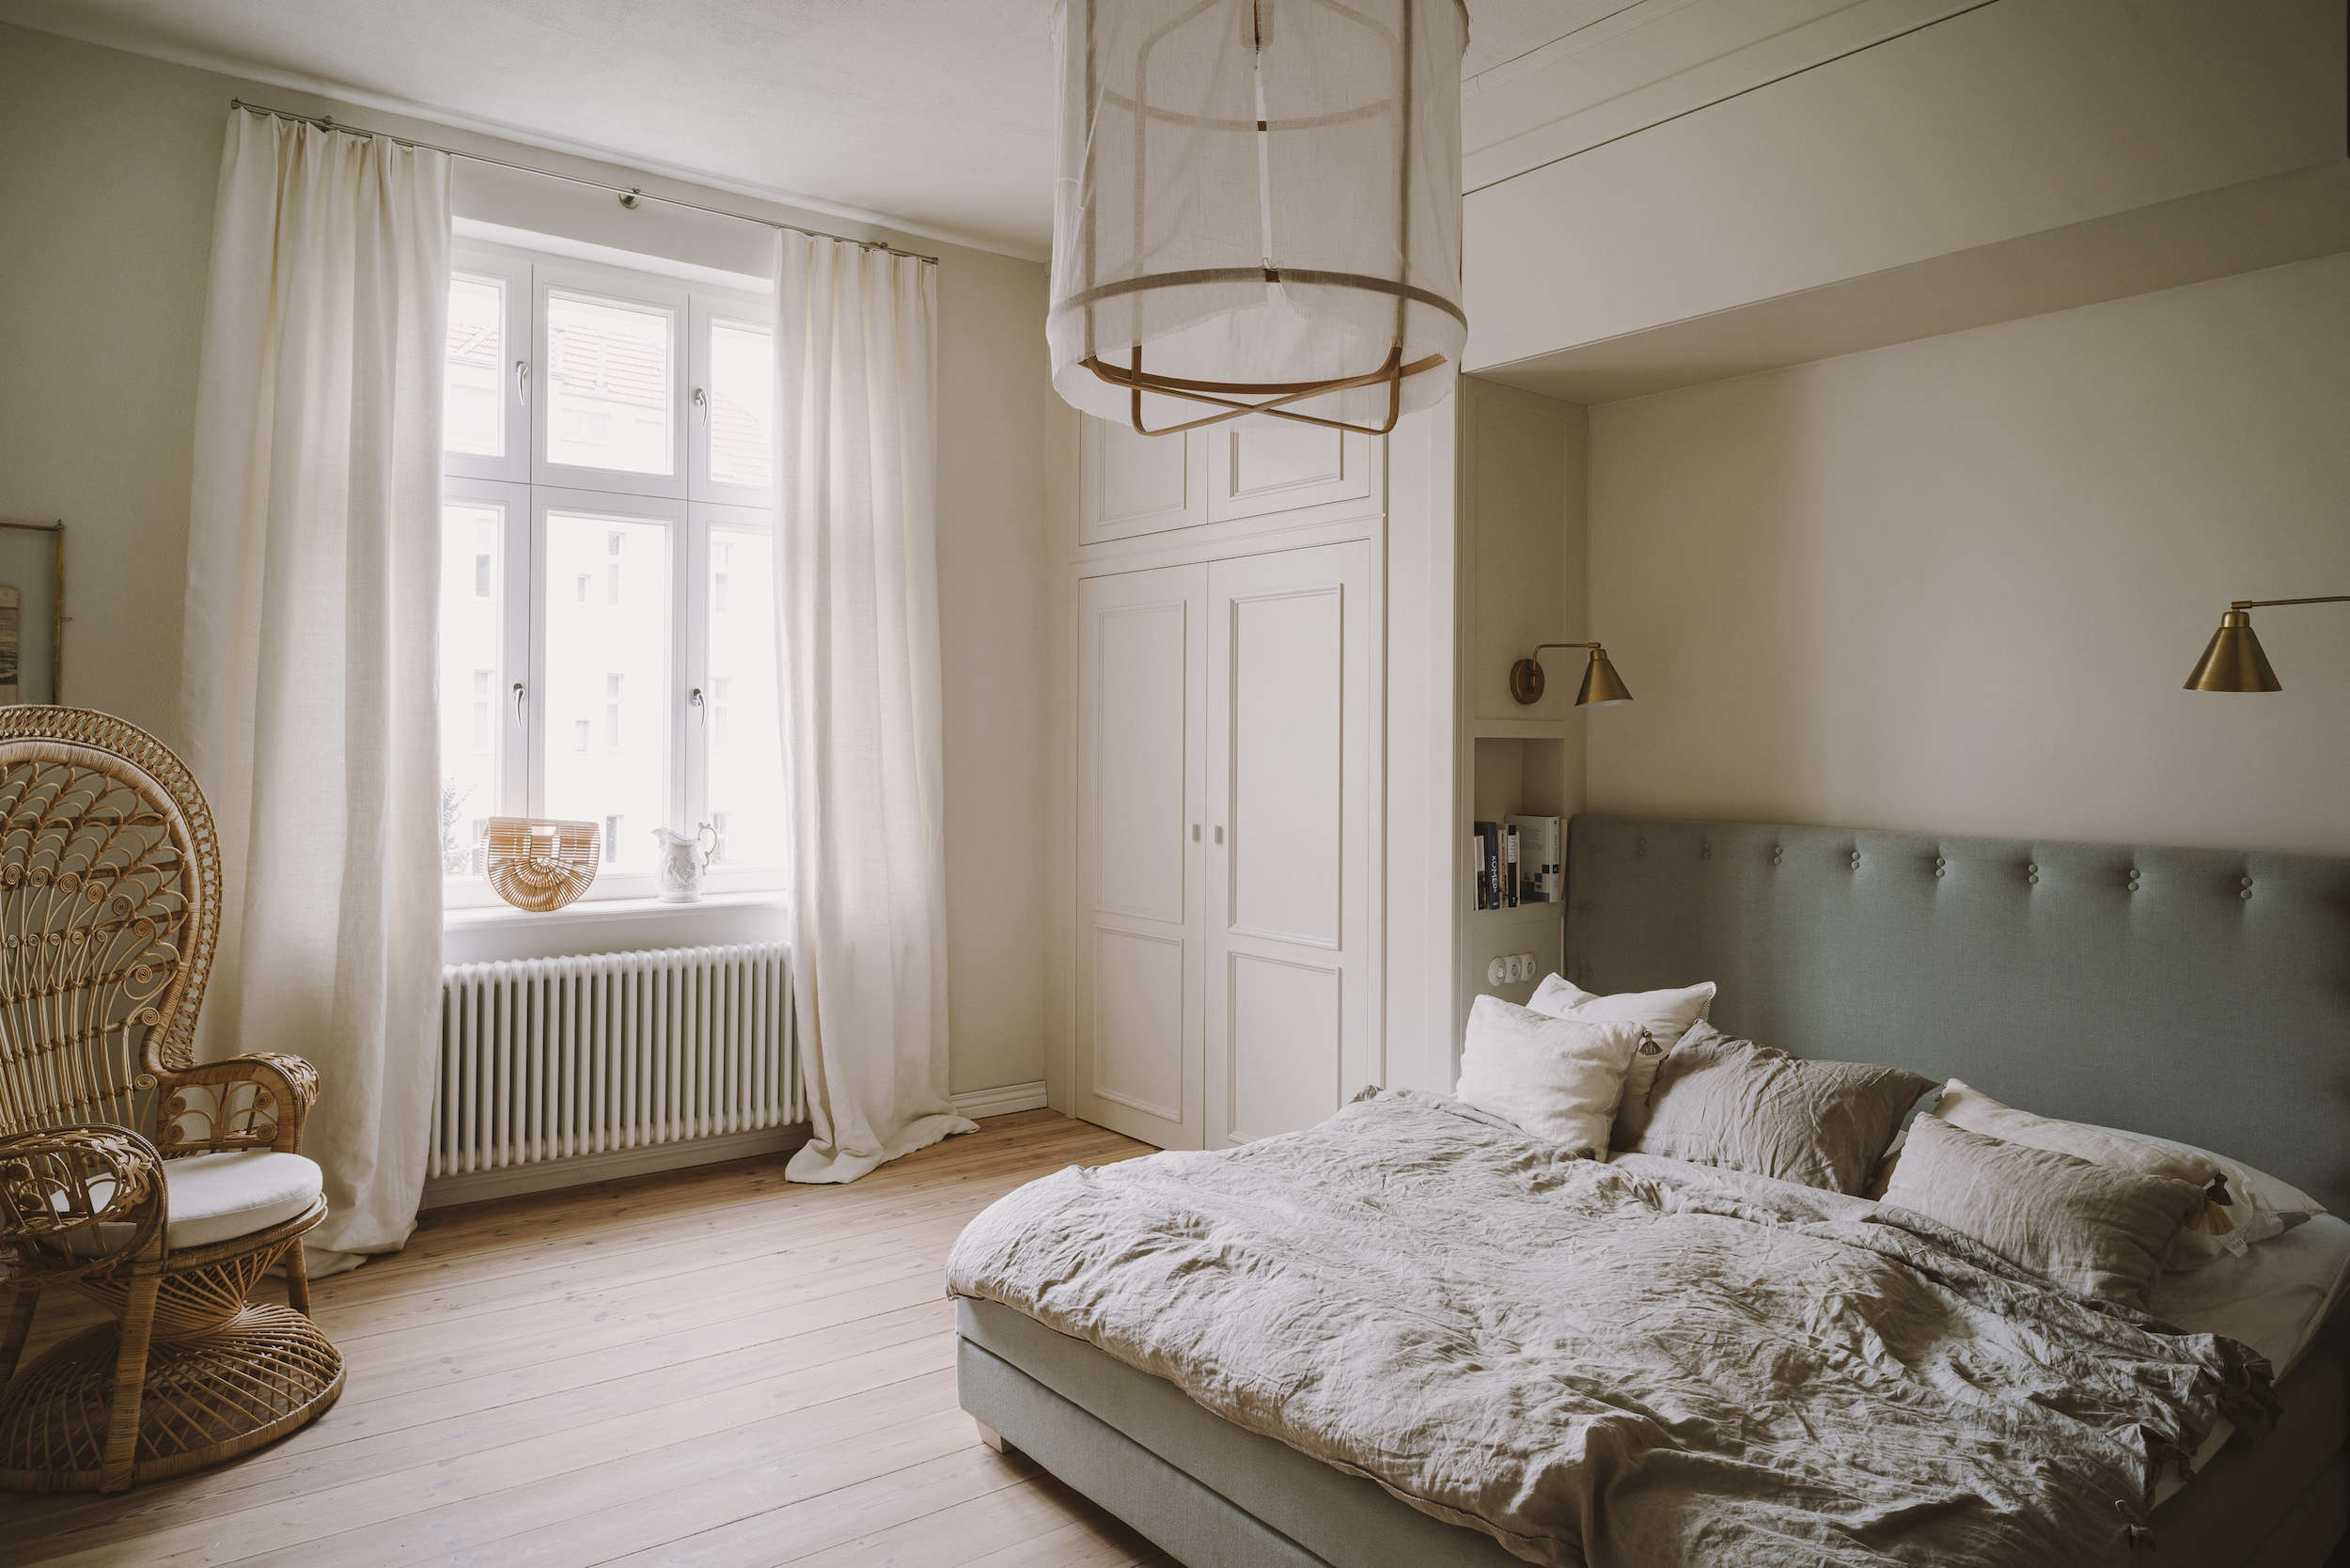 colombe studio's sopot apartment, bedroom, photograph by pion studio 0